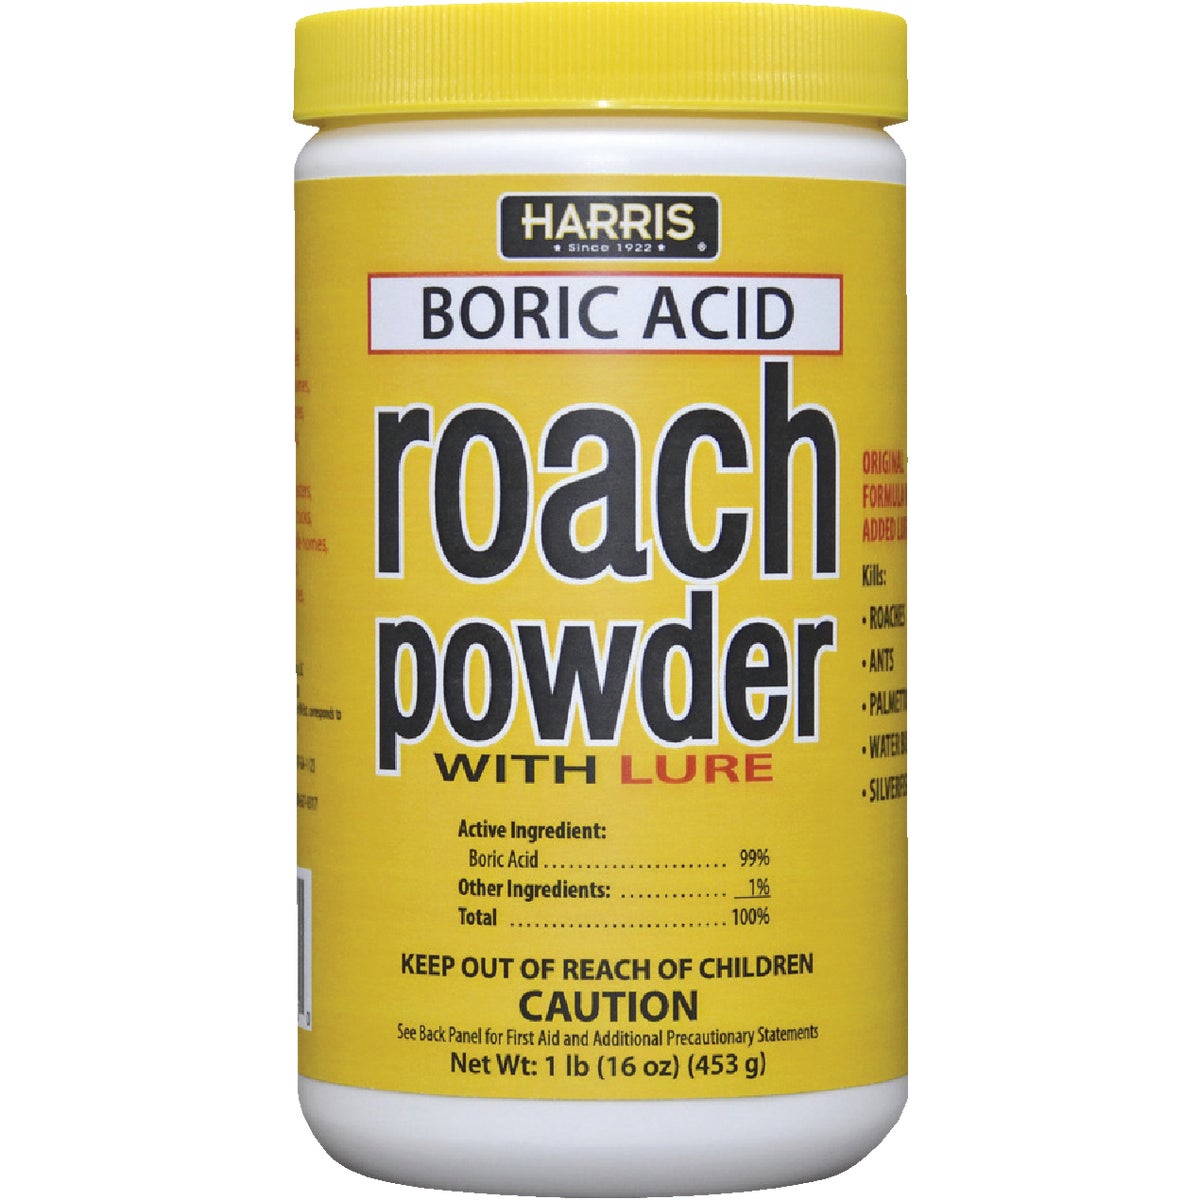 Item 700010, Boric acid roach killer with lure.